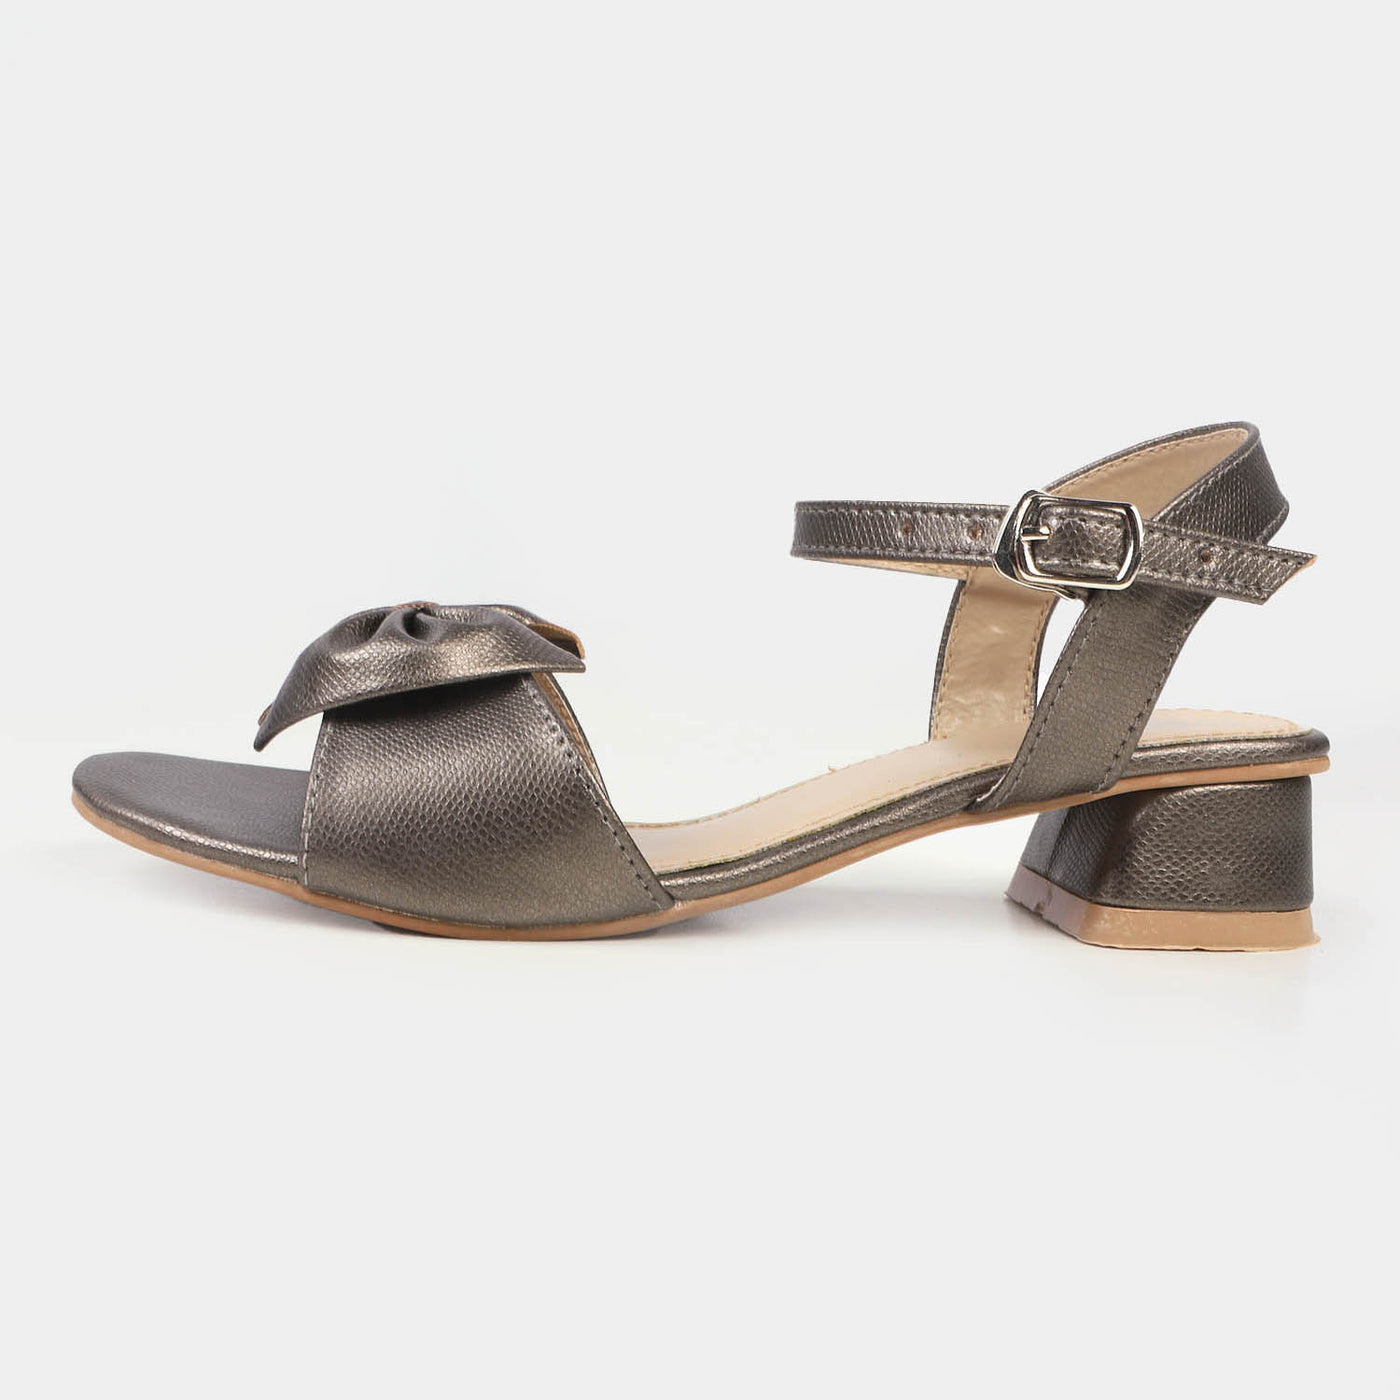 Girls Sandal Heels SD 456-19 - Grey